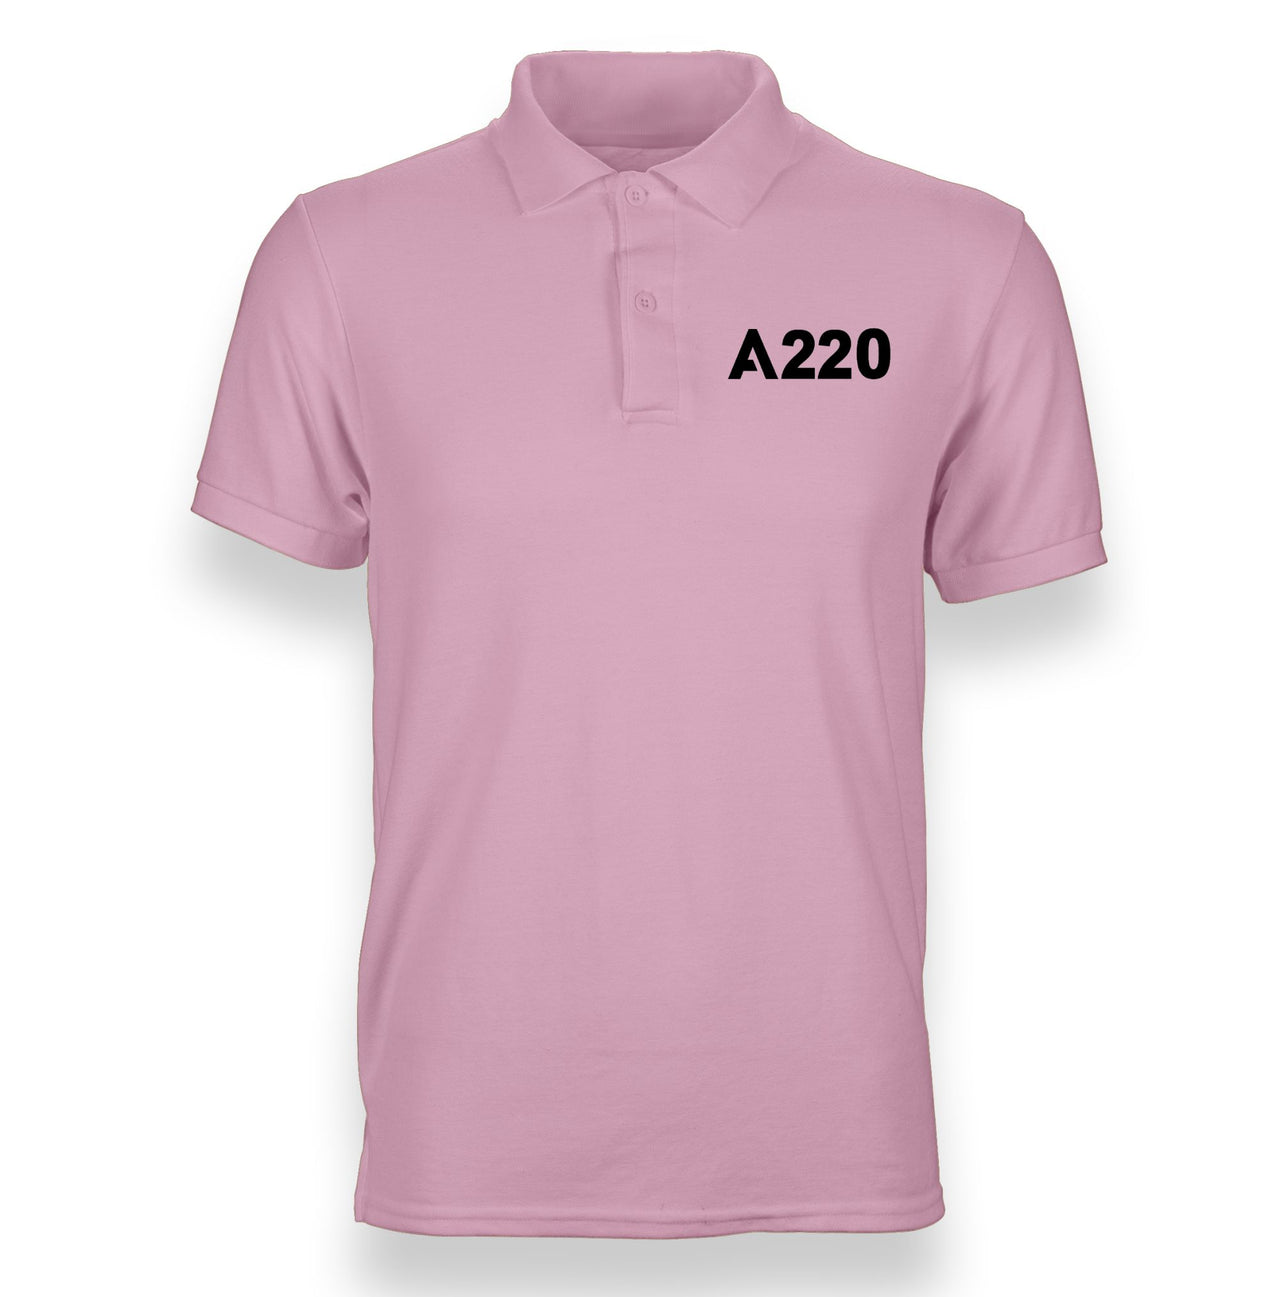 A220 Flat Text Designed "WOMEN" Polo T-Shirts